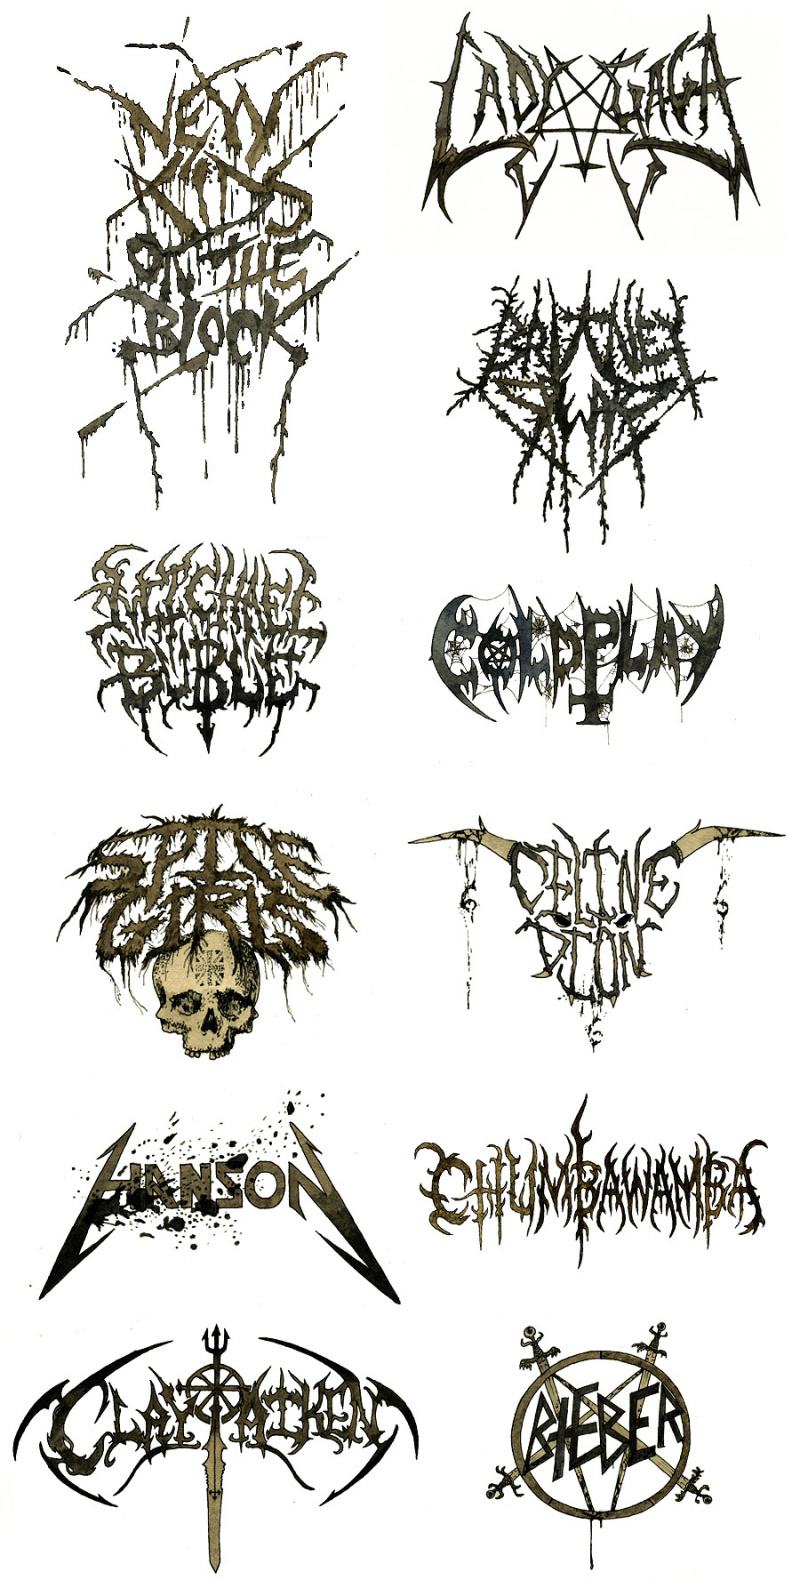 Obrázek Deathpop- pop groups who make-made the devils music 17-12-2011